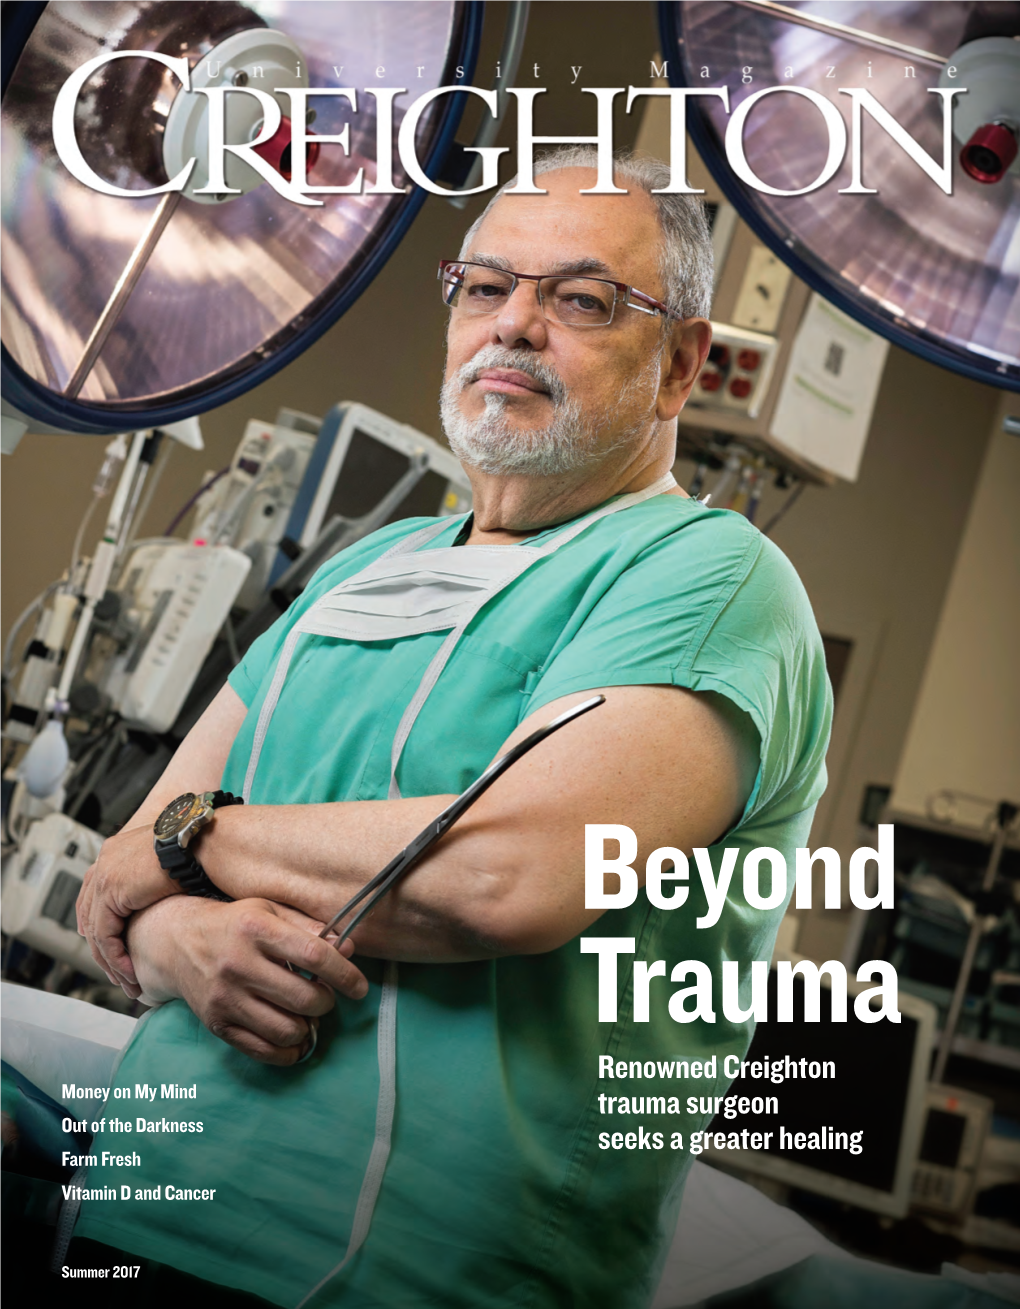 Renowned Creighton Trauma Surgeon Seeks a Greater Healing